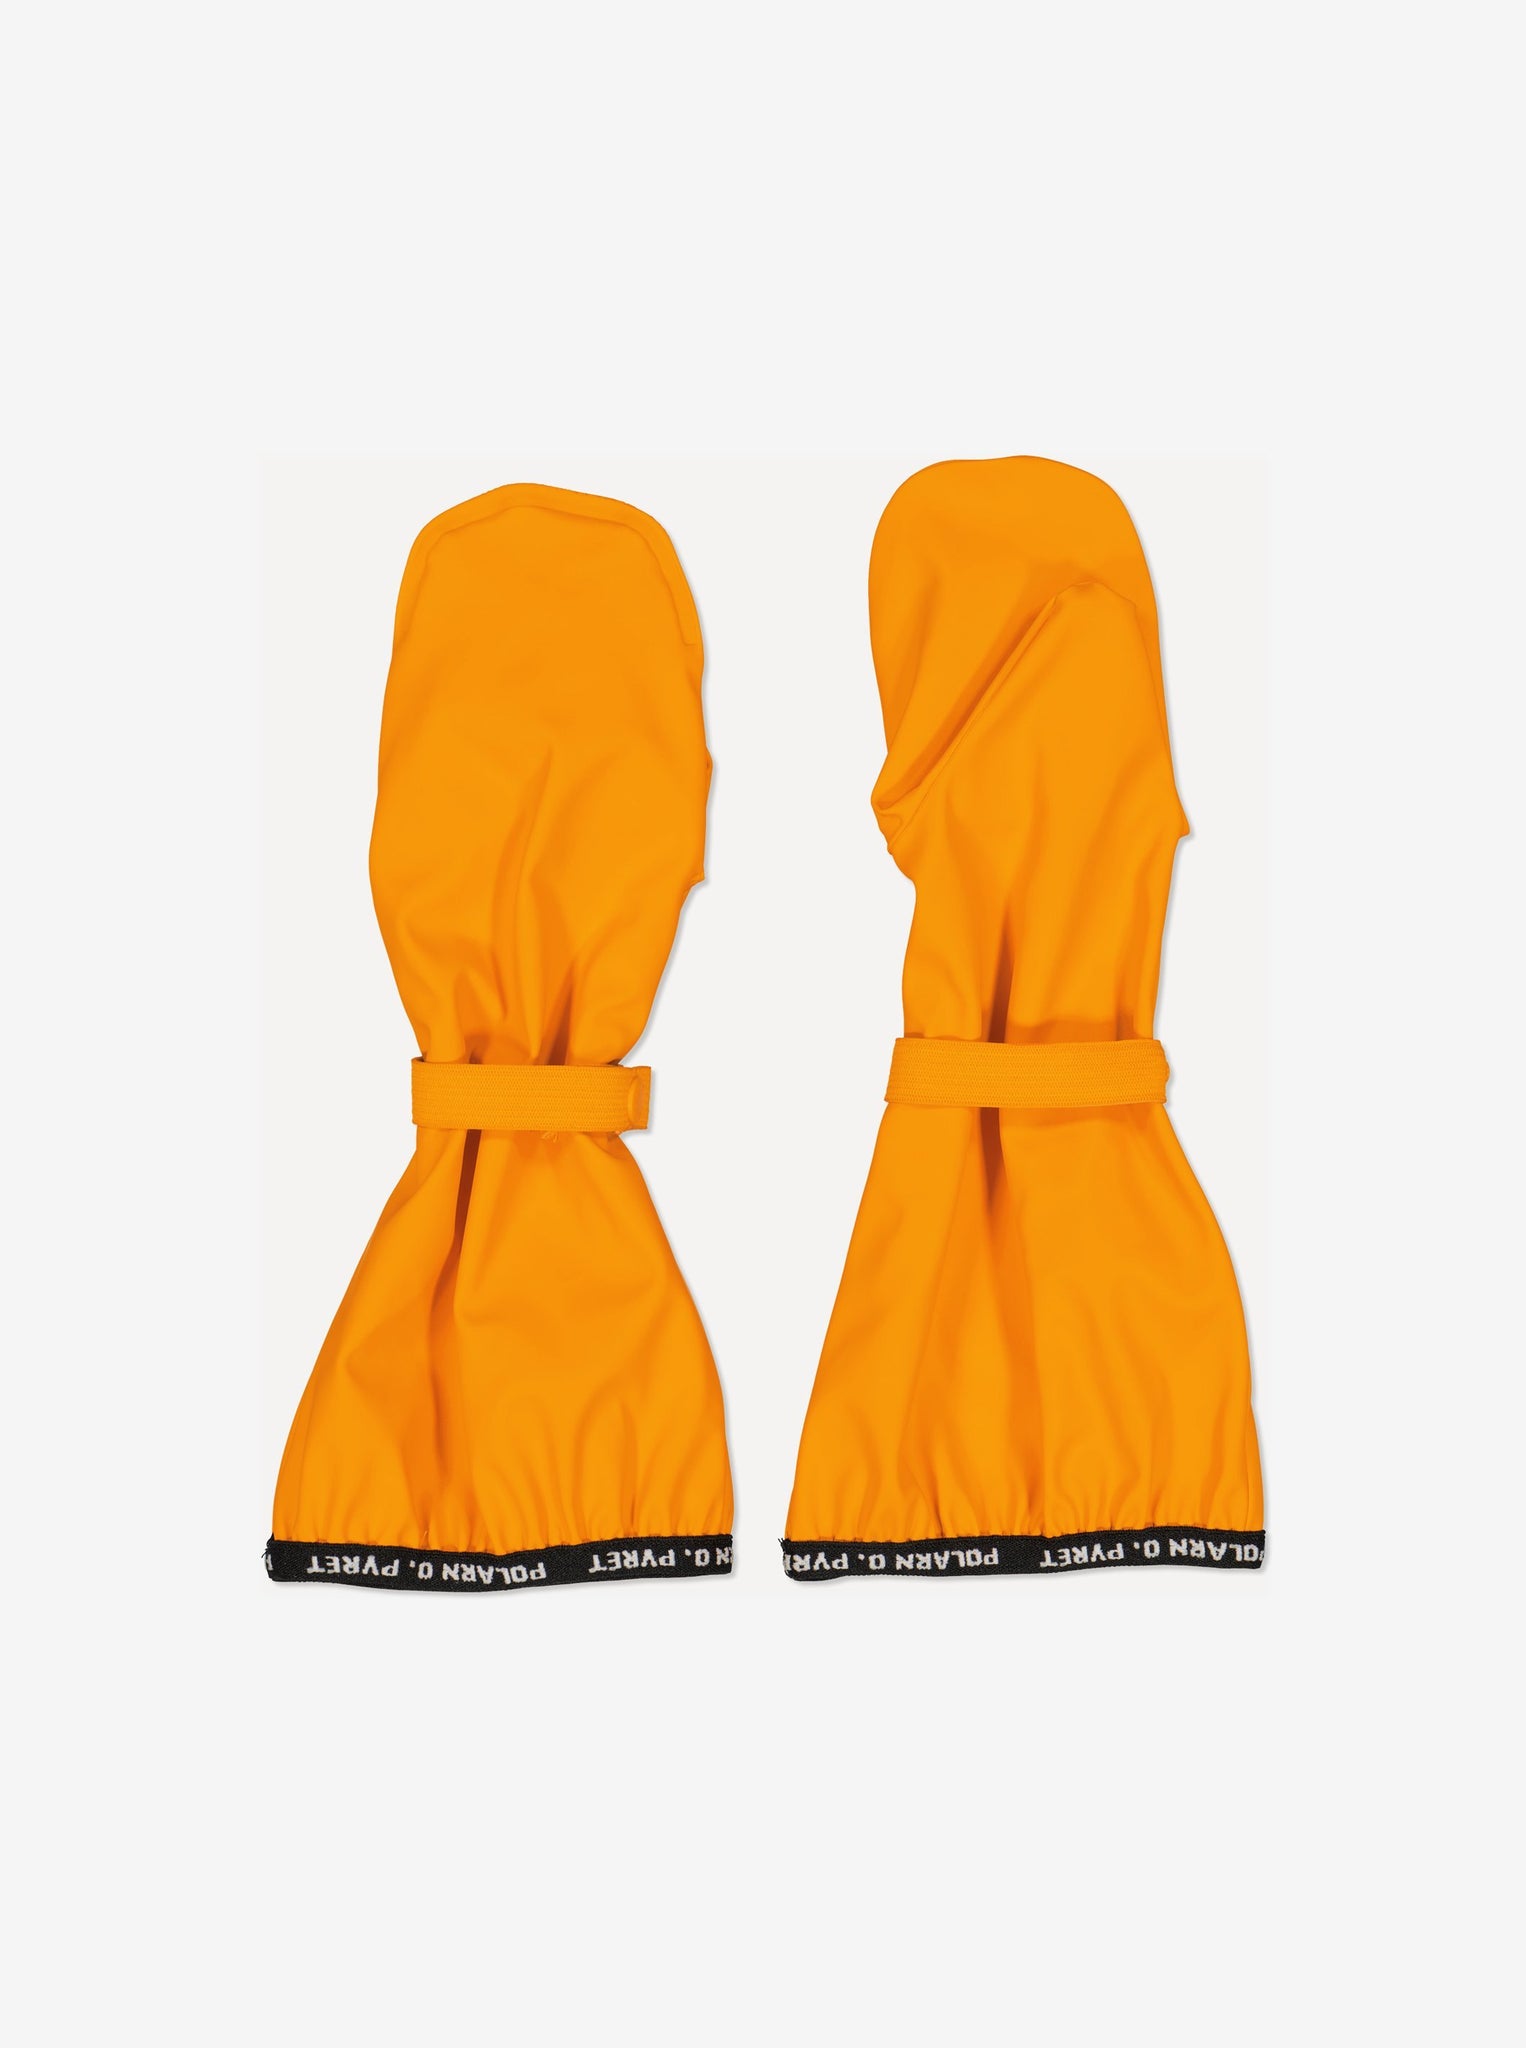 Yellow Kids Waterproof Rain Mittens from Polarn O. Pyret Kidswear. 